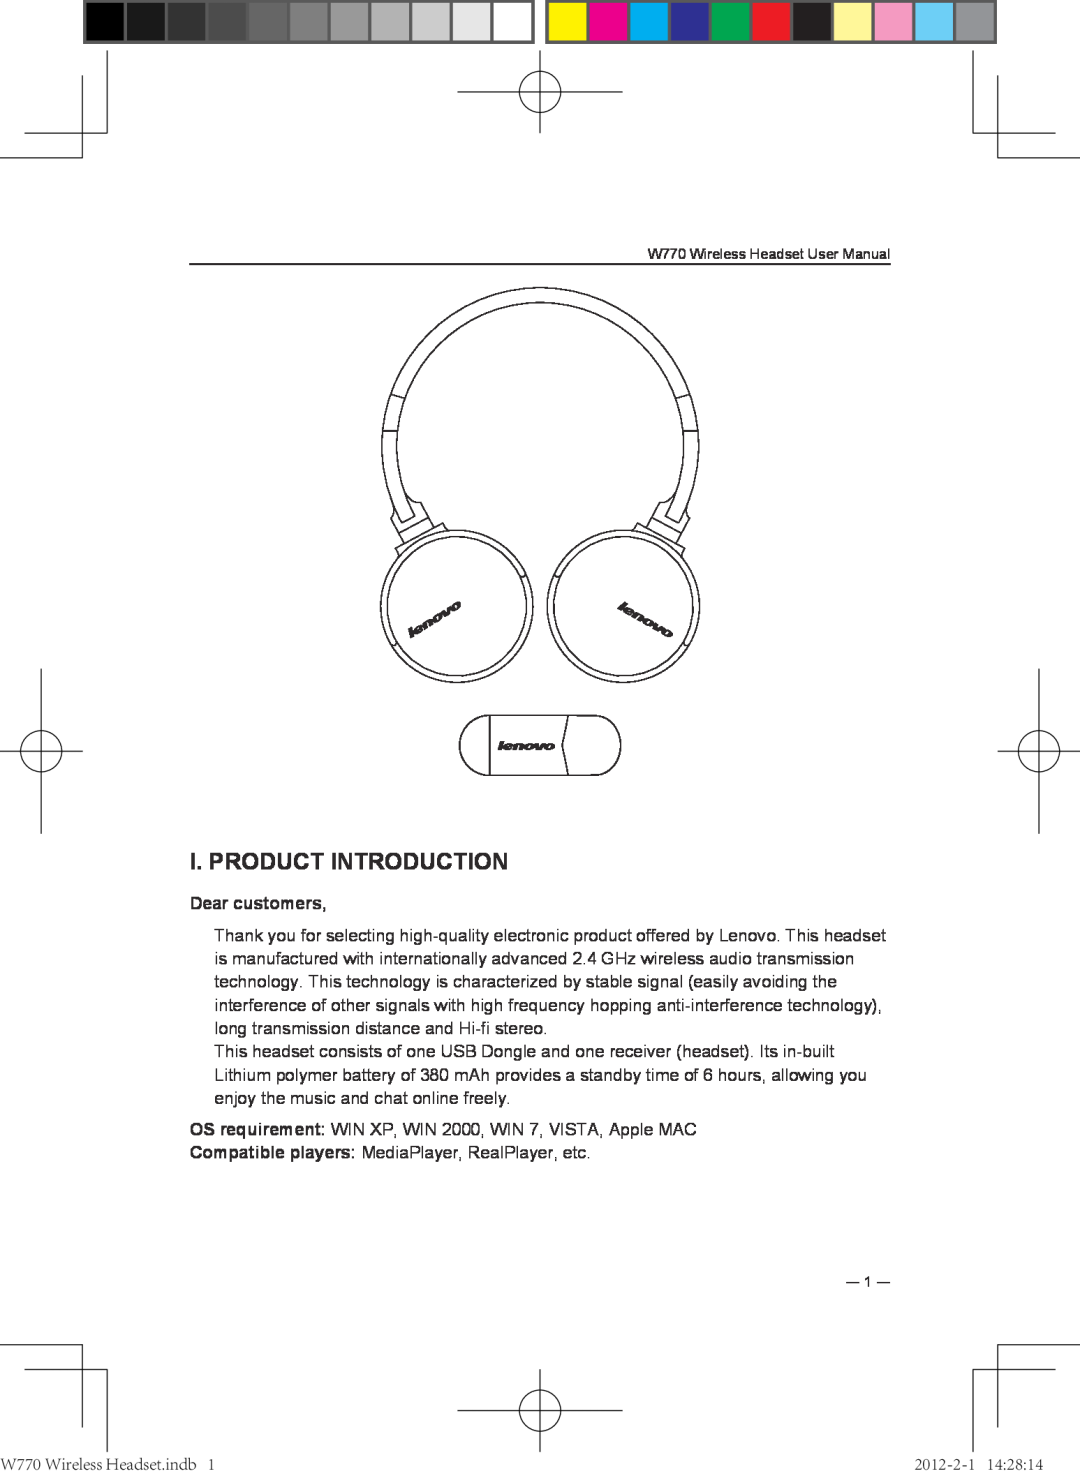 Lenovo W770 user manual I. Product Introduction 